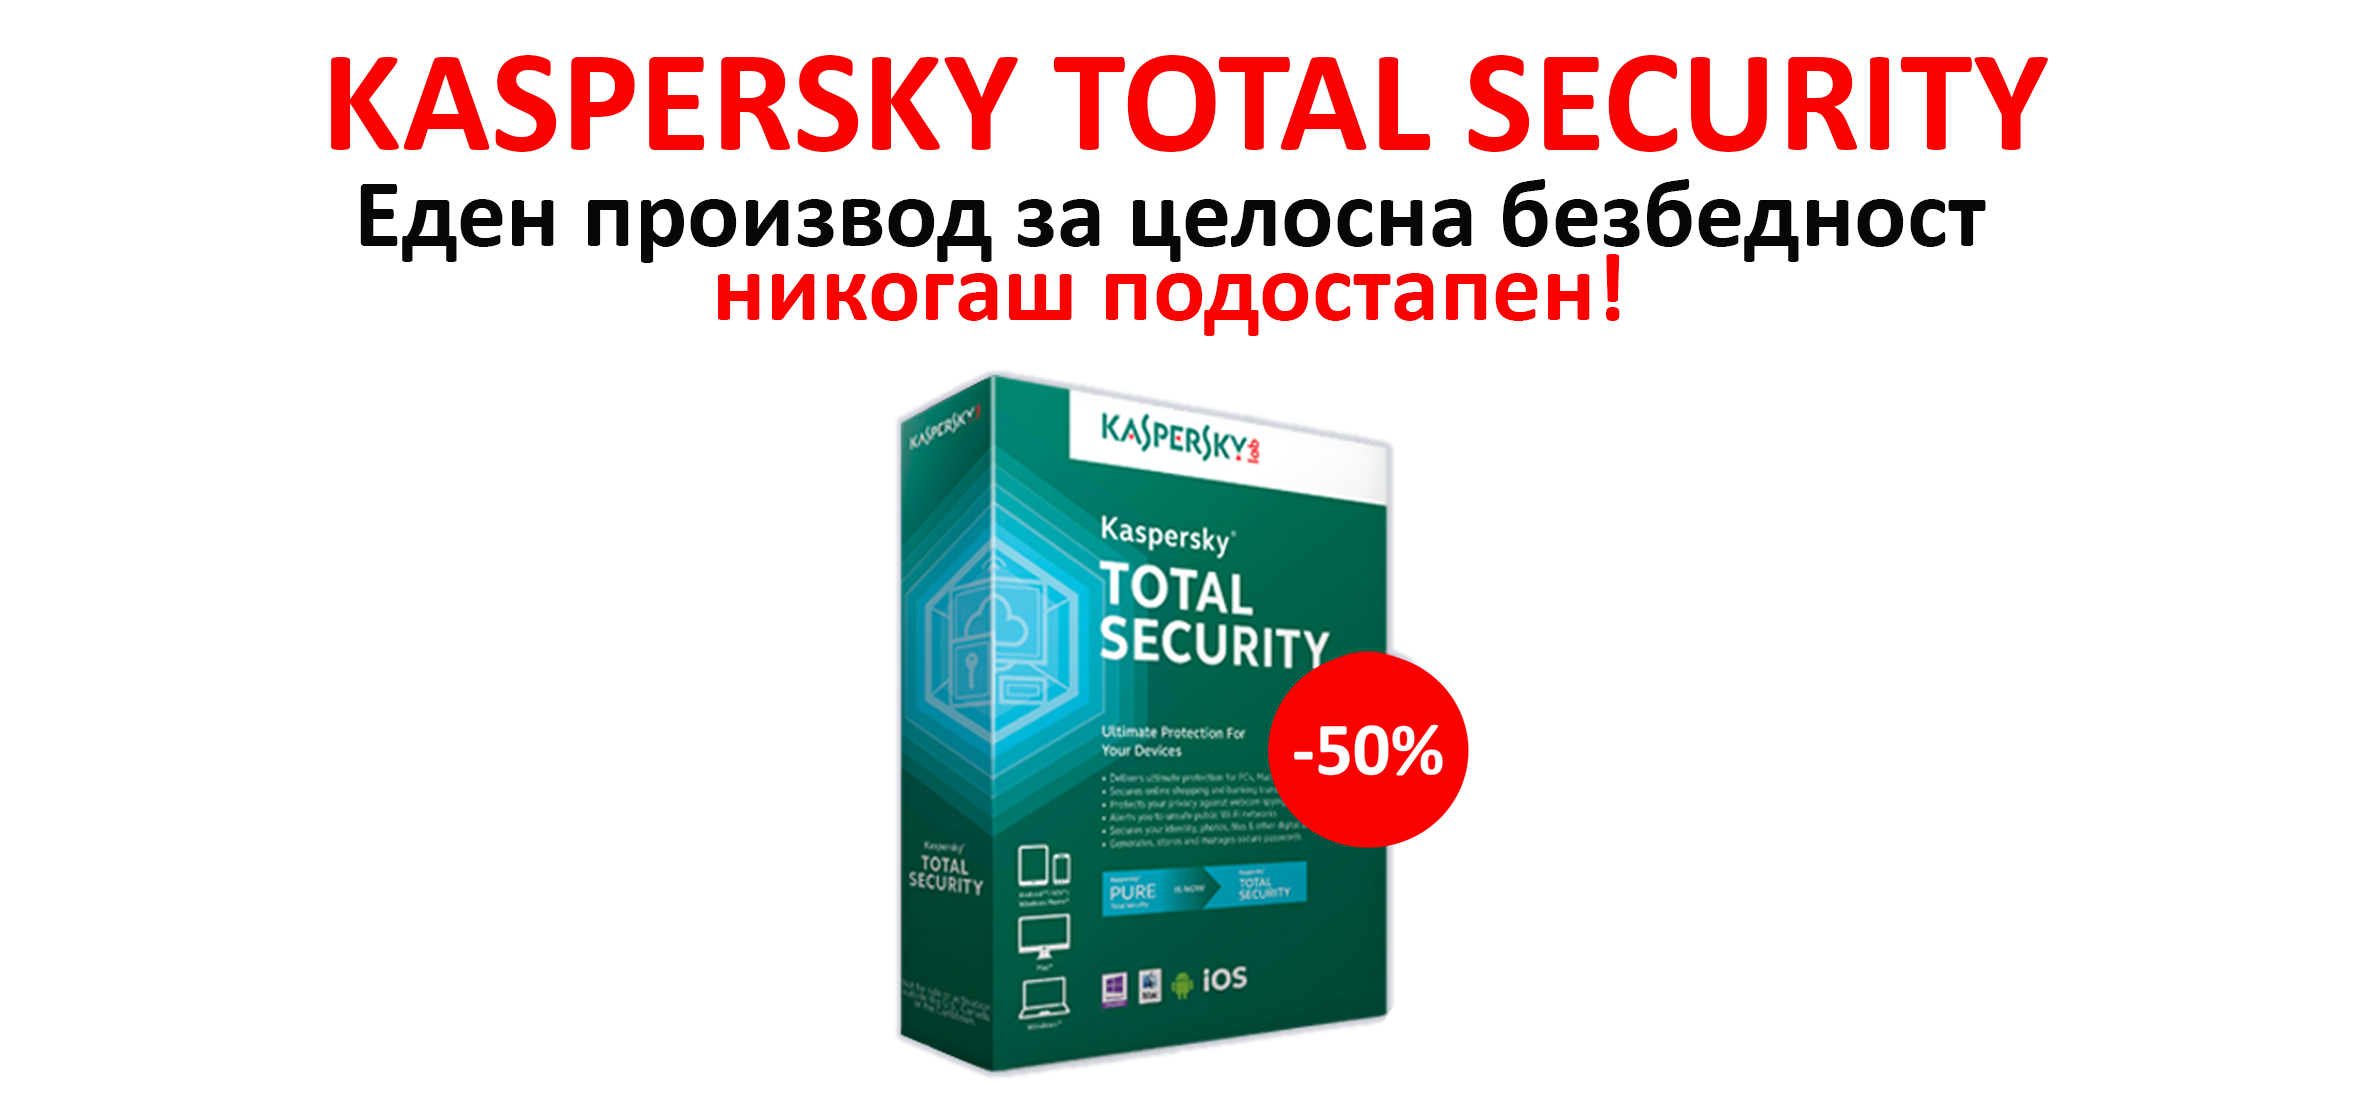 Kaspersky-total-security-promocija